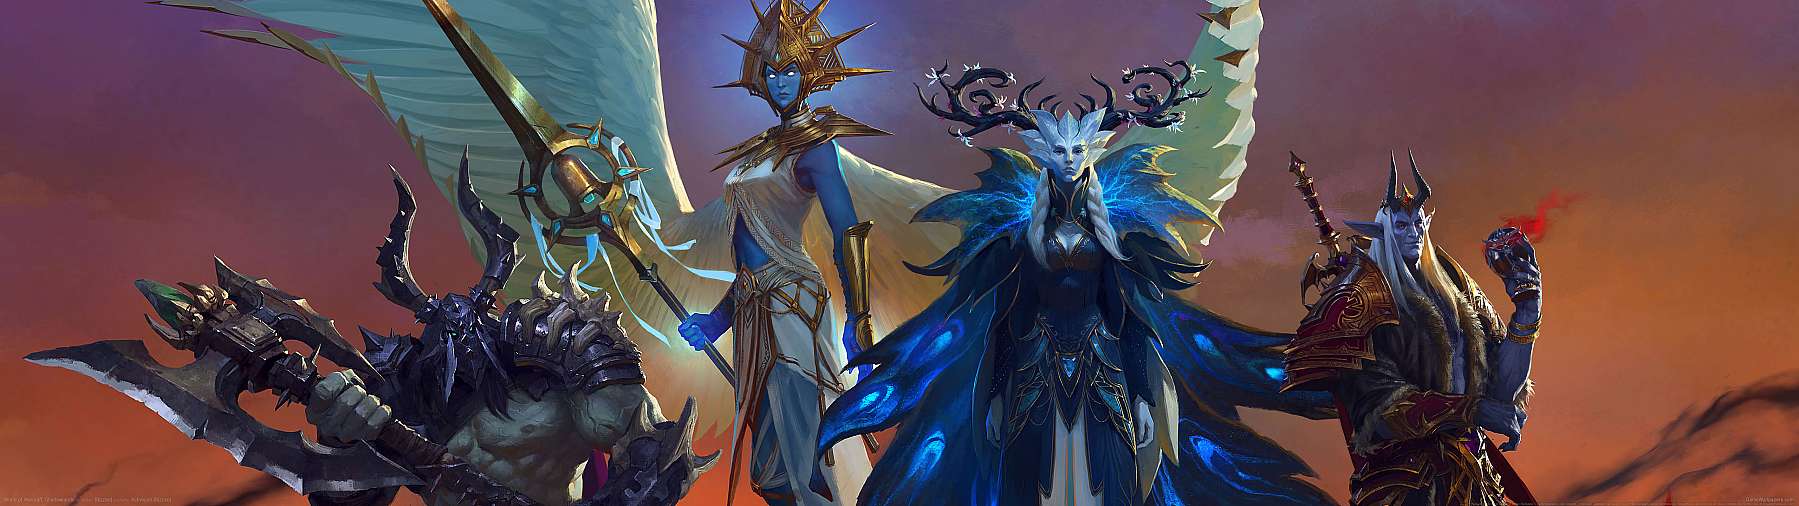 World of Warcraft: Shadowlands superwide wallpaper or background 02